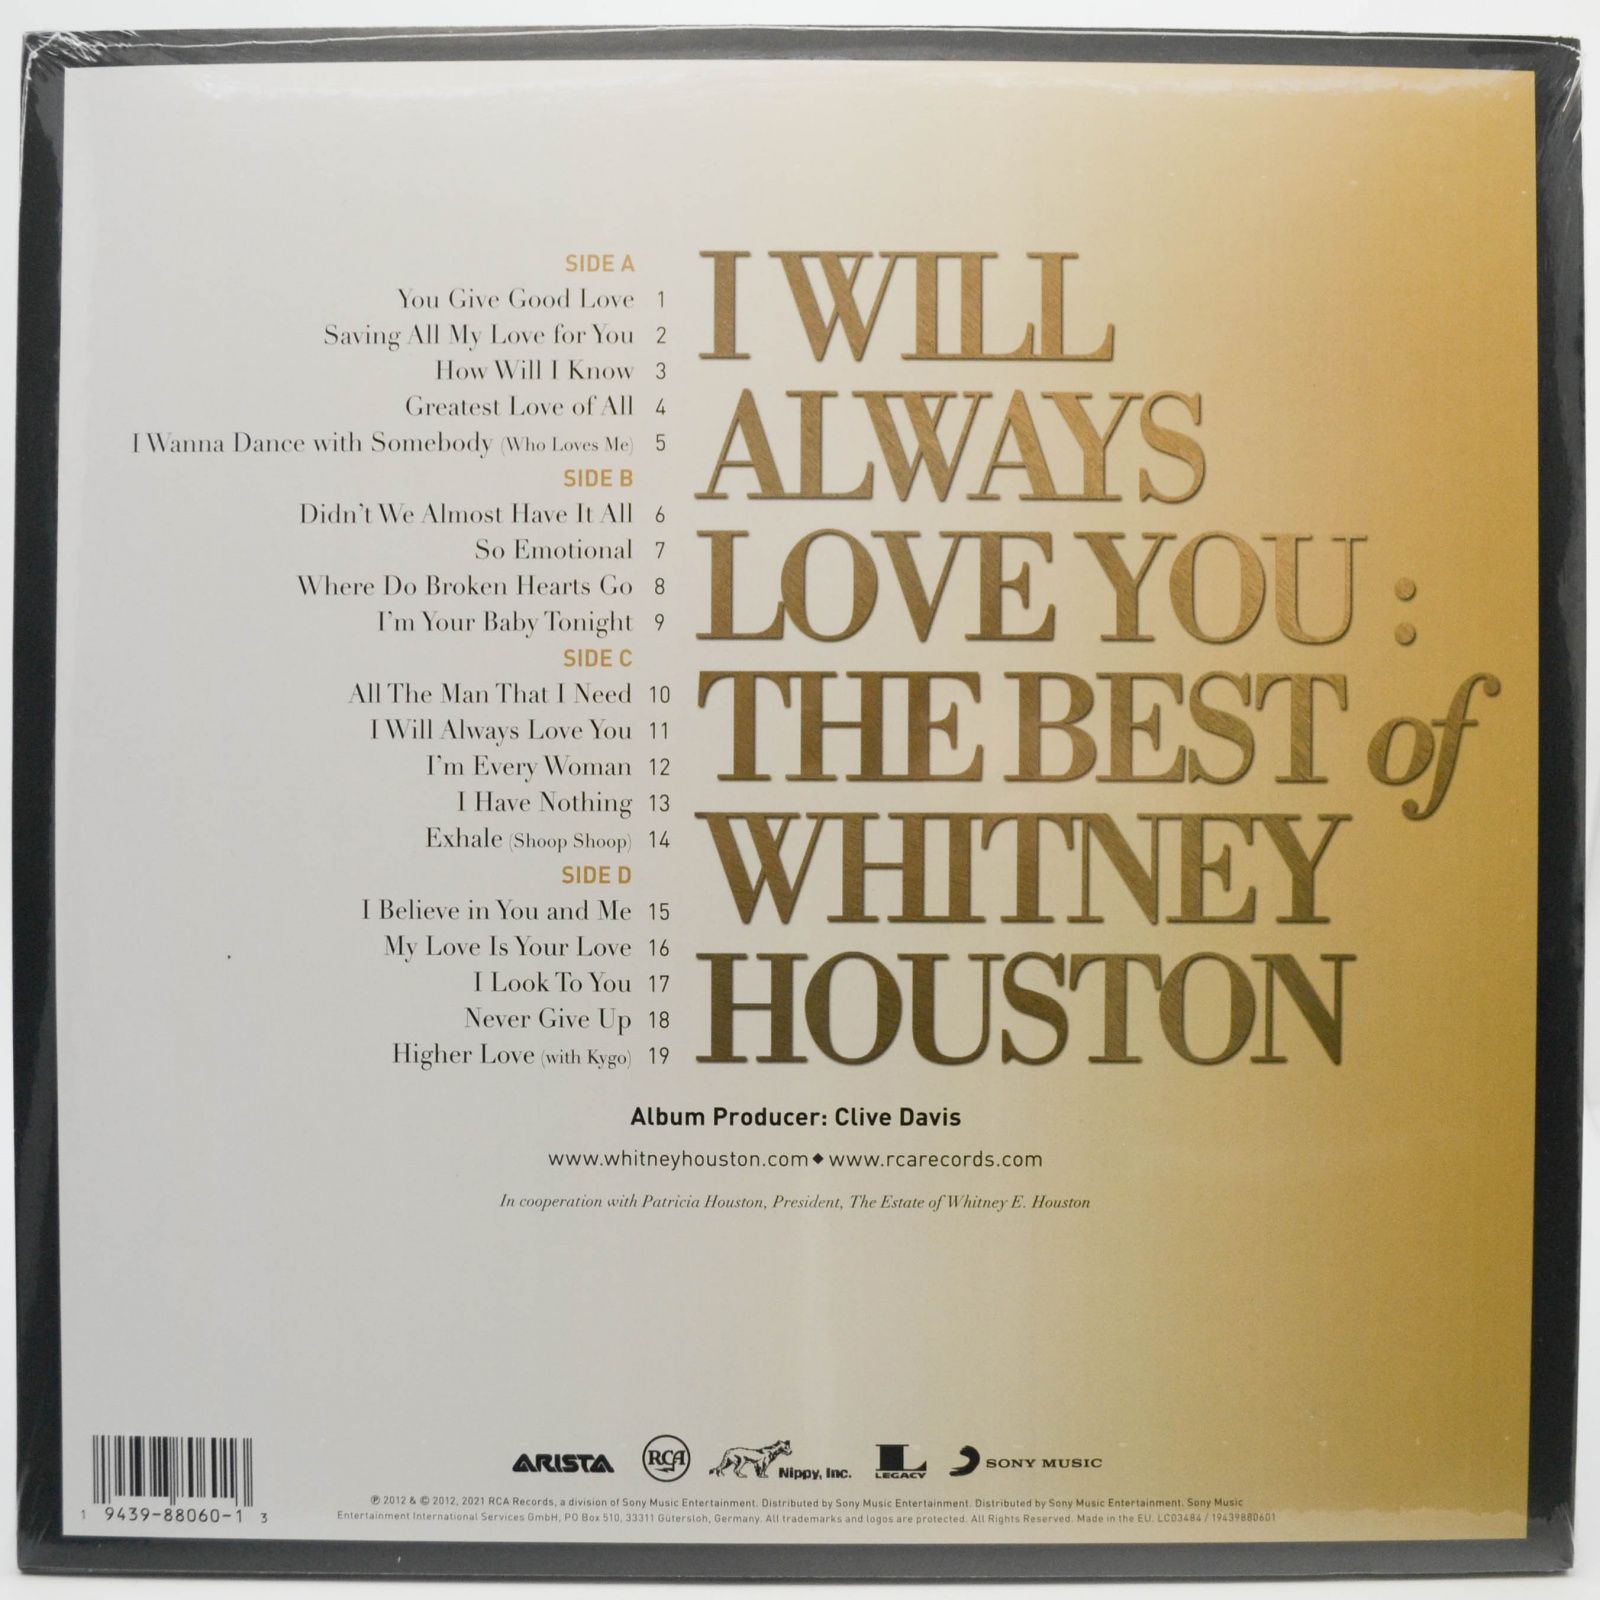 Whitney Houston — I Will Always Love You: The Best Of Whitney Houston (2LP), 2012